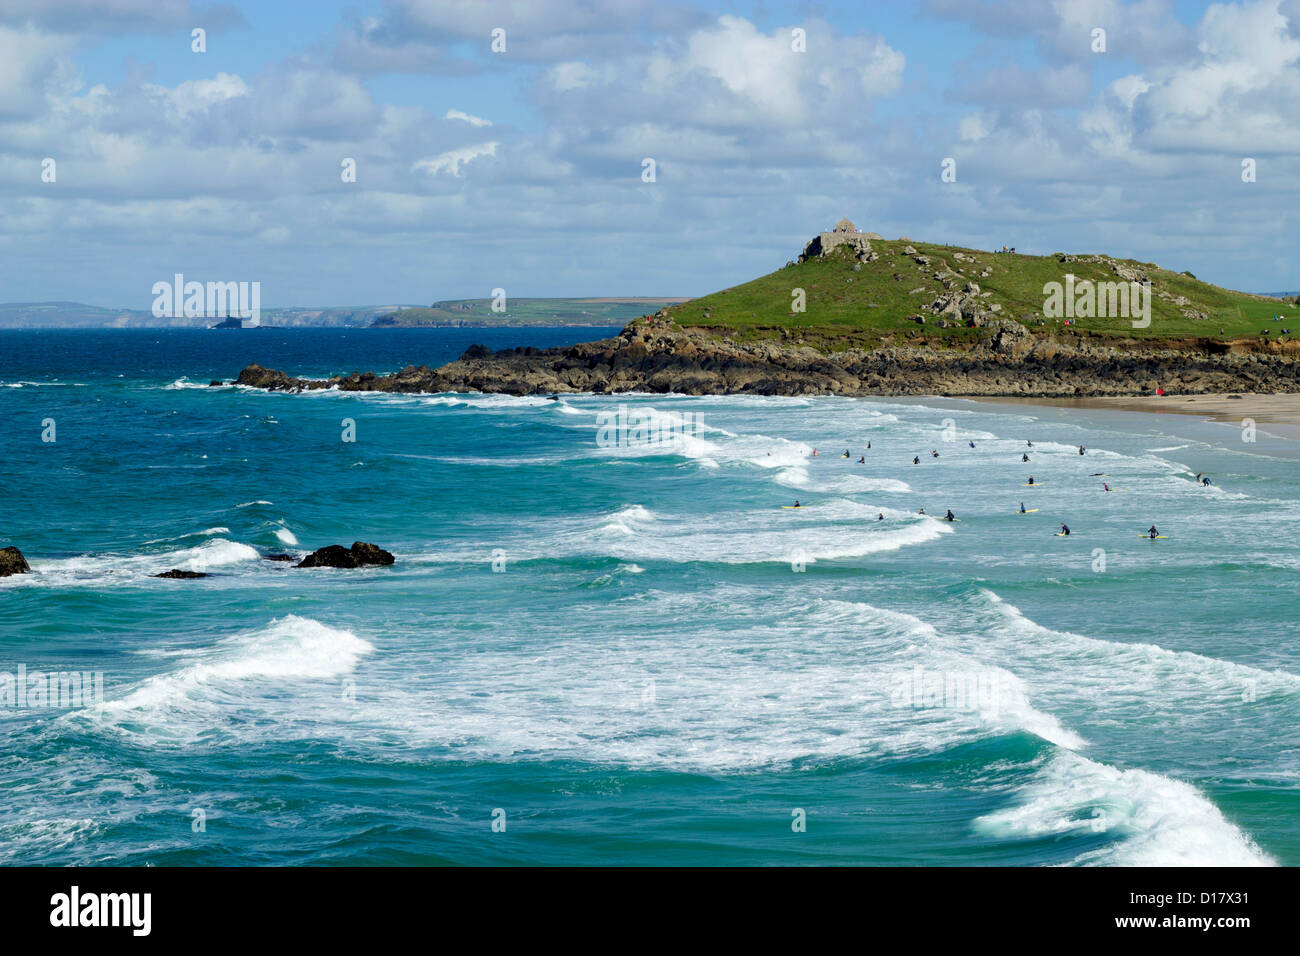 St. Ives Porthmeor beach surfers, Cornwall UK. Stock Photo